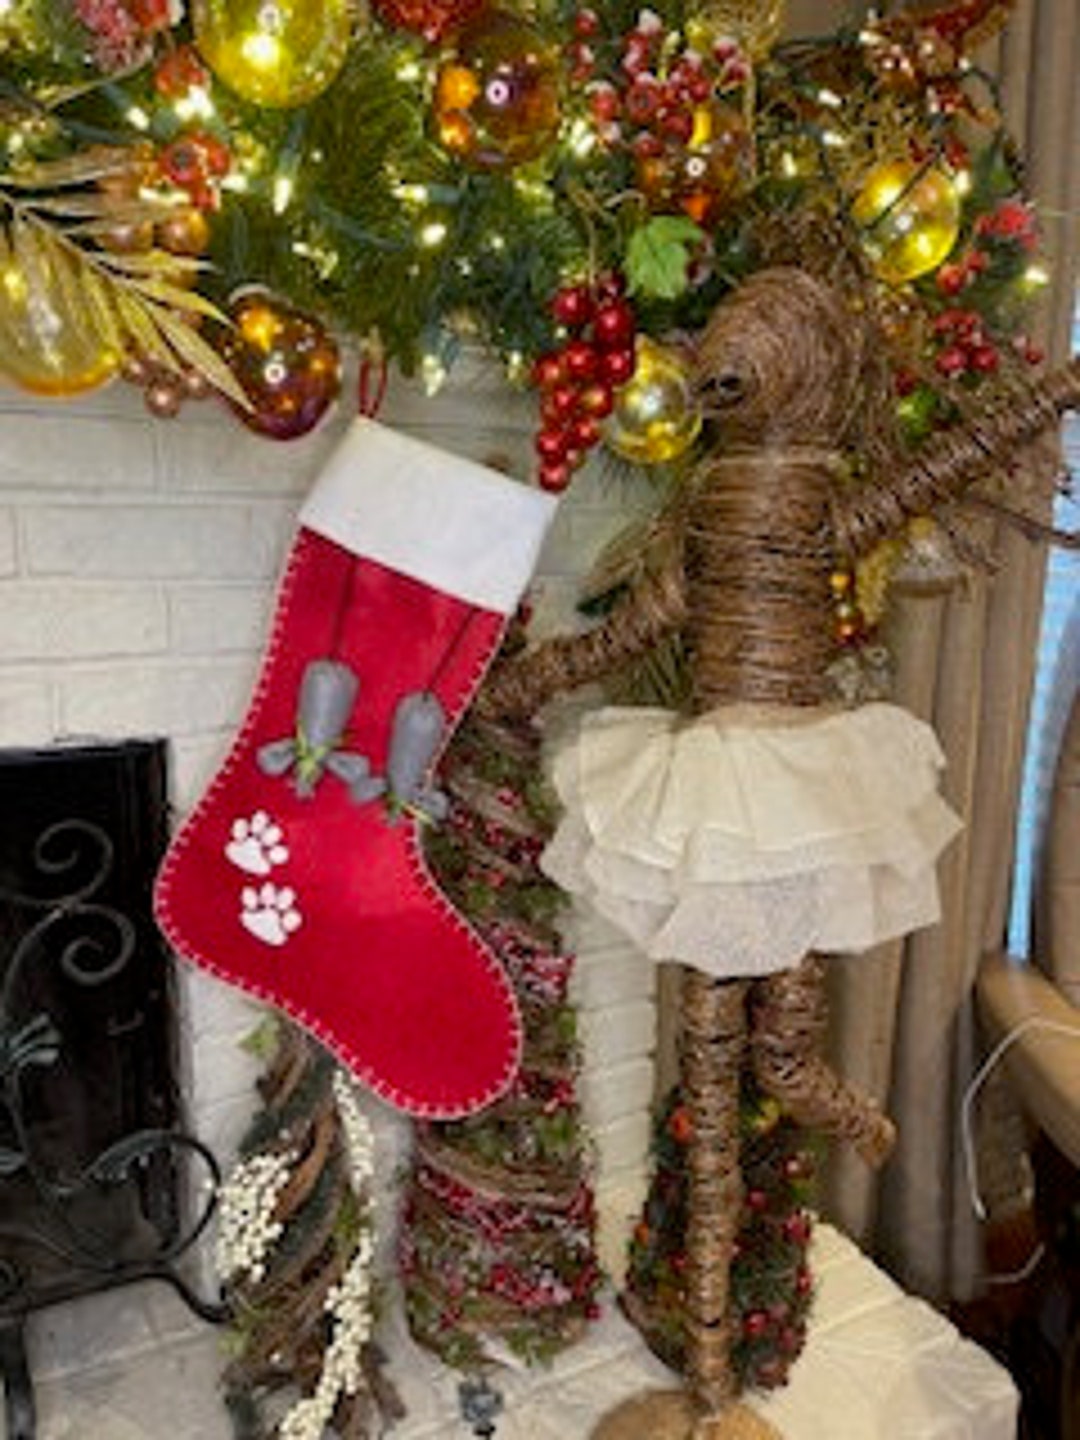 Needlepoint Christmas Stockings Personalize Your Holiday Decor 